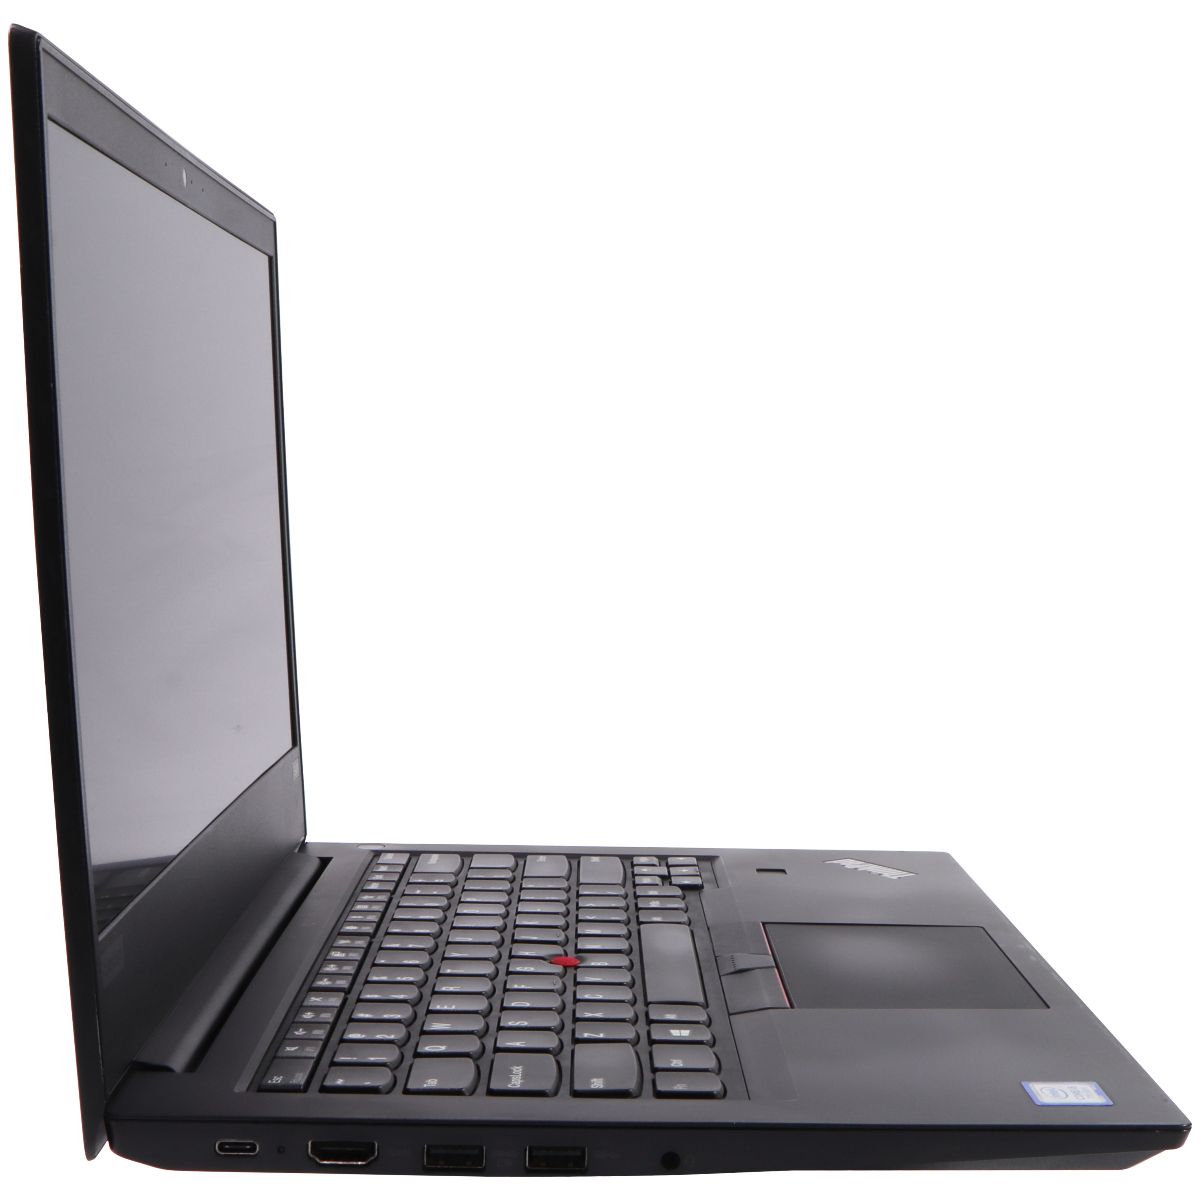 Lenovo ThinkPad E480 (14-in) Laptop (20KN-003YUS) i5-7200U/256GB/16GB/10 Home Laptops - PC Laptops & Netbooks Lenovo    - Simple Cell Bulk Wholesale Pricing - USA Seller